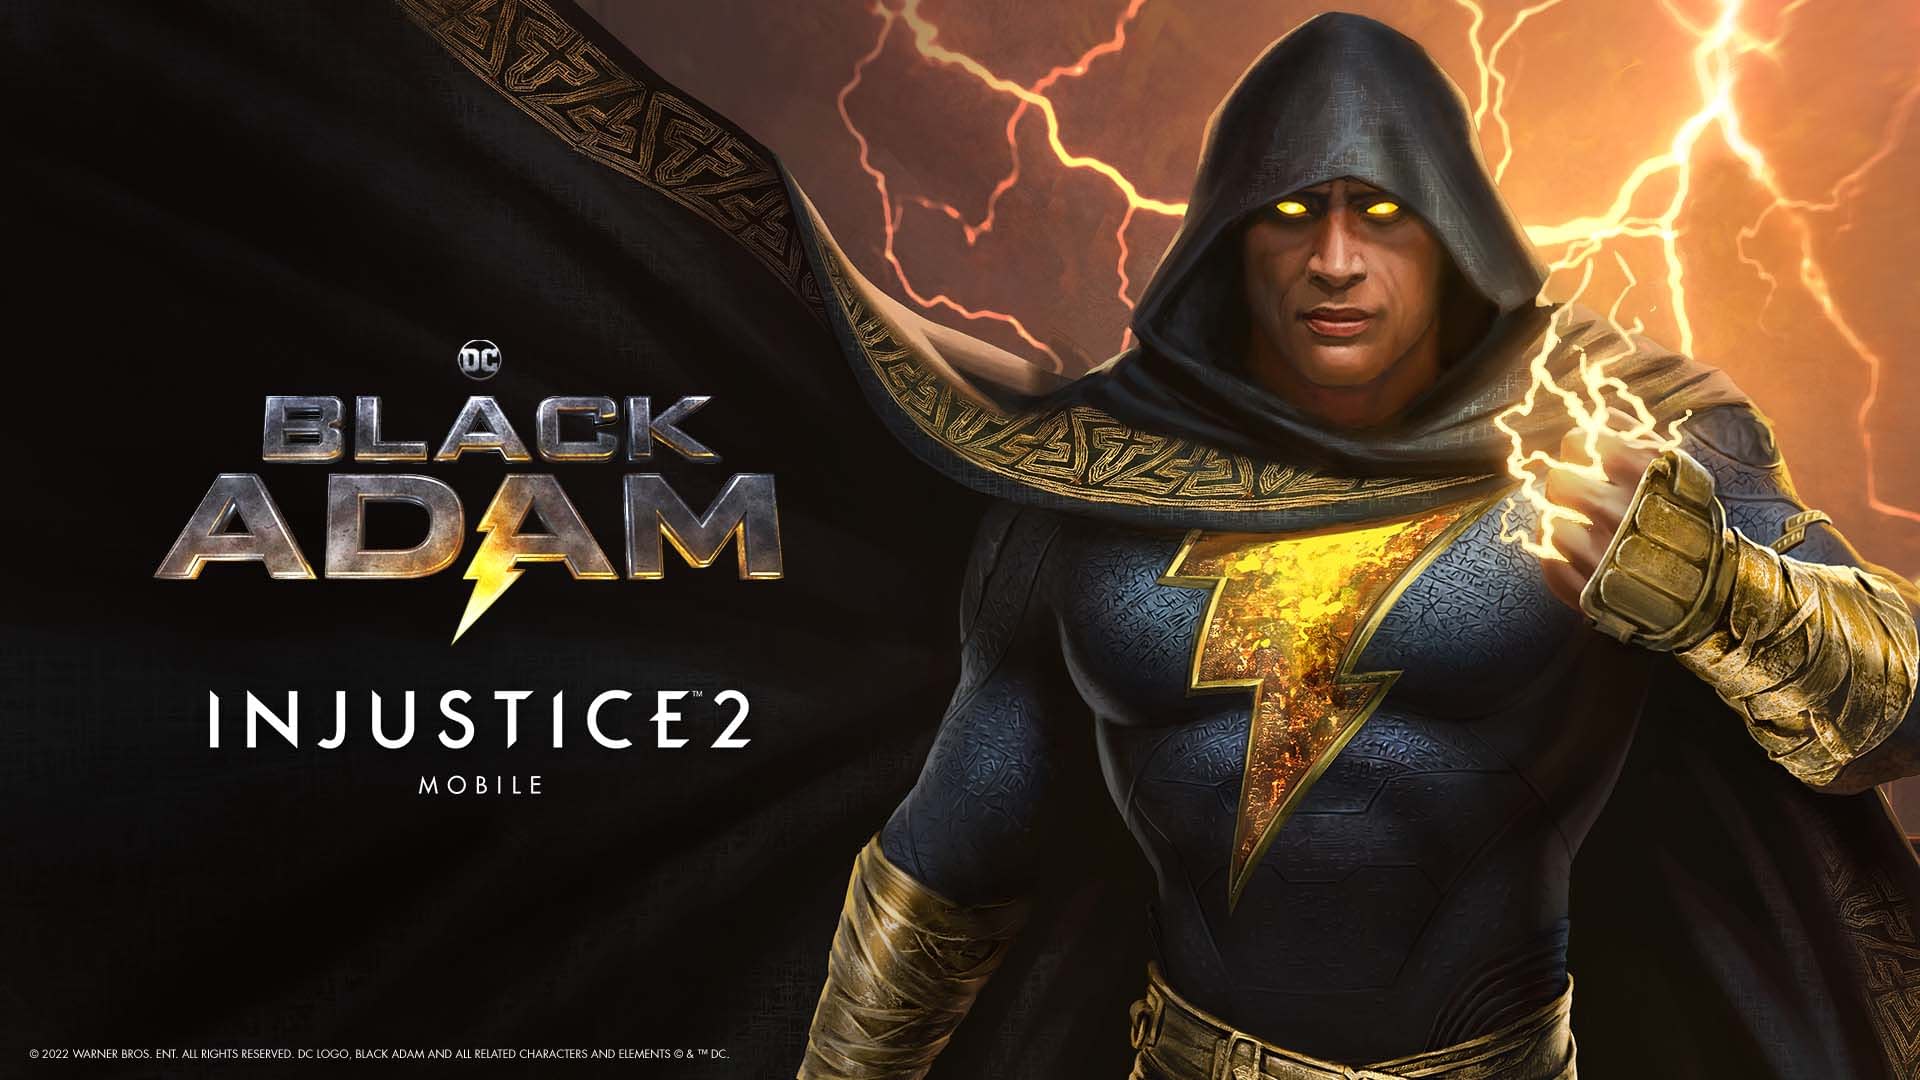 Black Adam, Injustice 2 Mobile Wiki